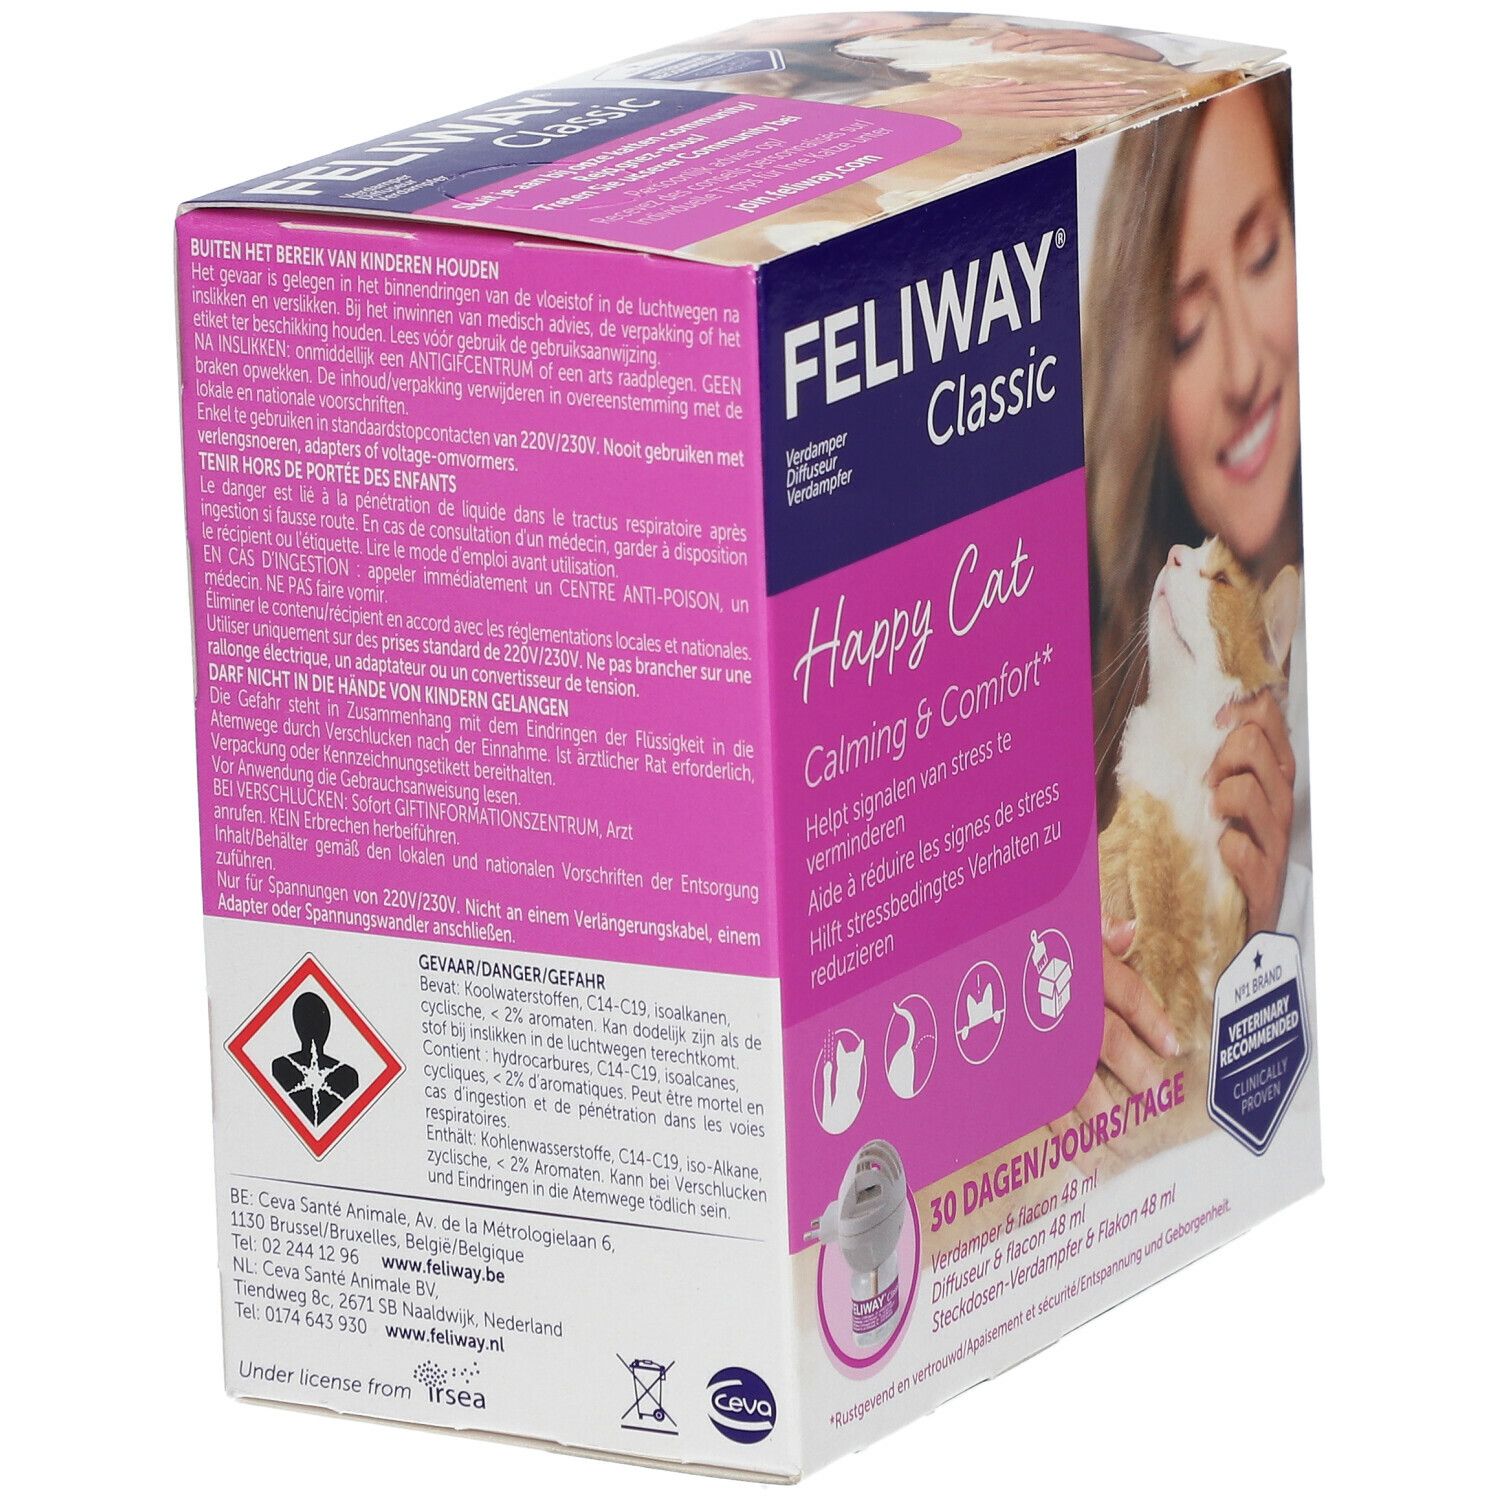 FELIWAY® CLASSIC Startset mit Steckdosen-Verdampfer & Flakon 48 ml